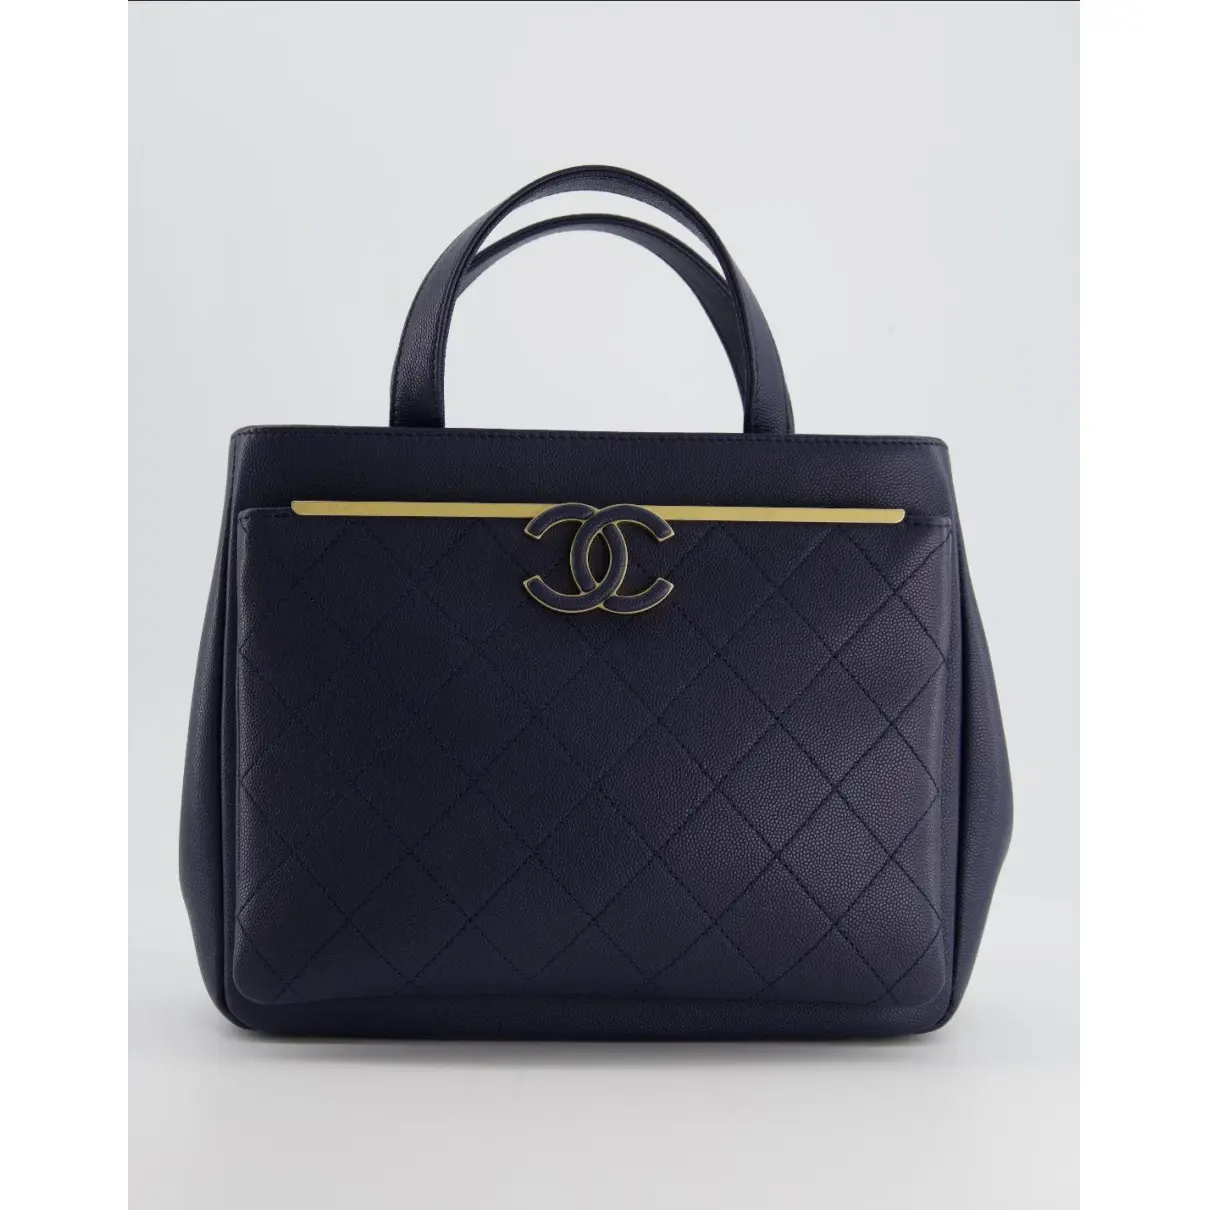 Buy Chanel Business Affinity leather handbag online